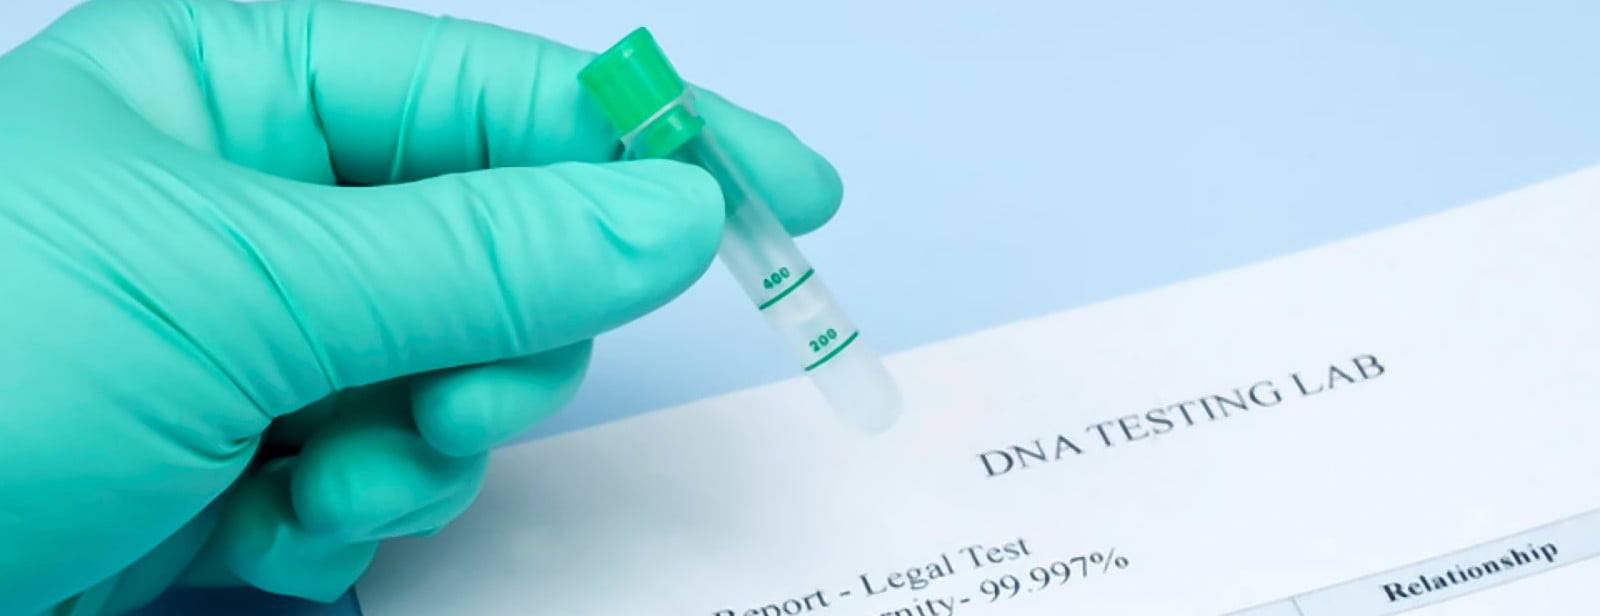 Méthode de datation de l’ADN